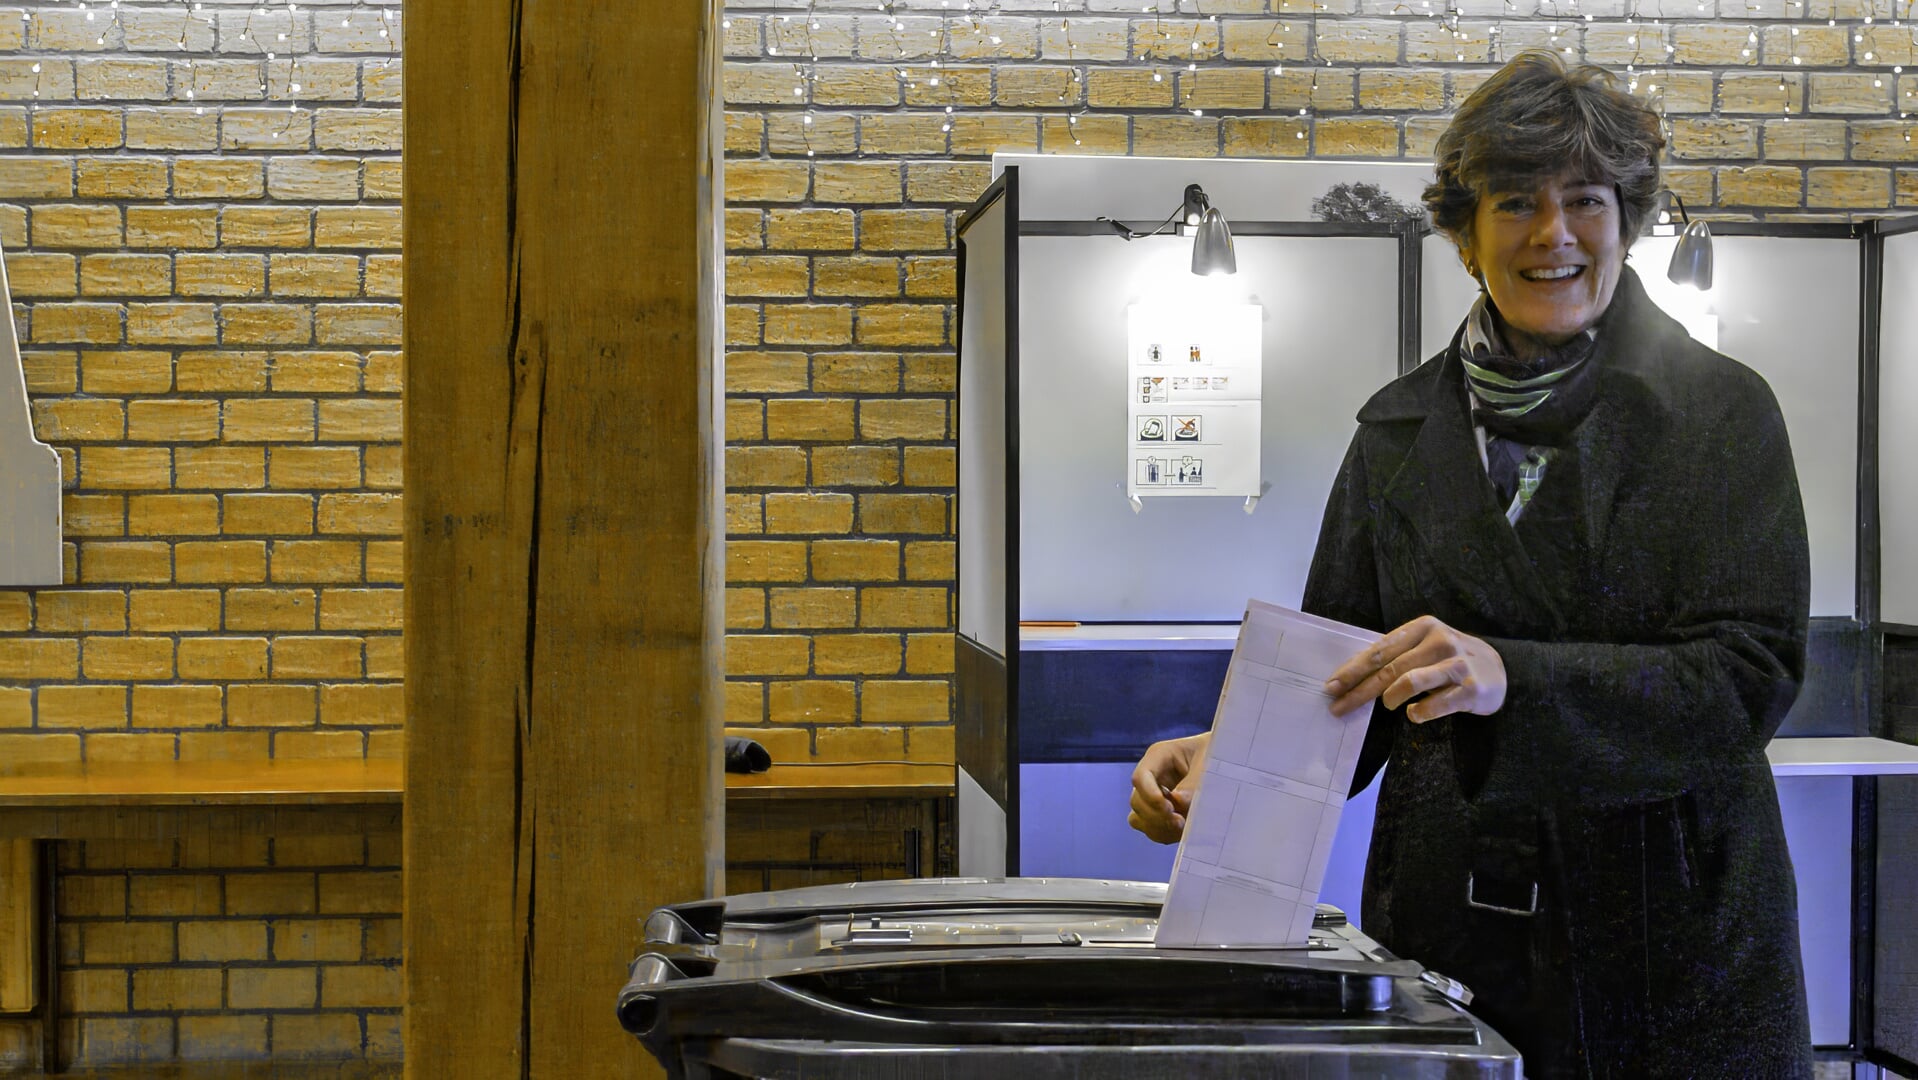 Burgemeester van der Weele brengt haar stem uit. 